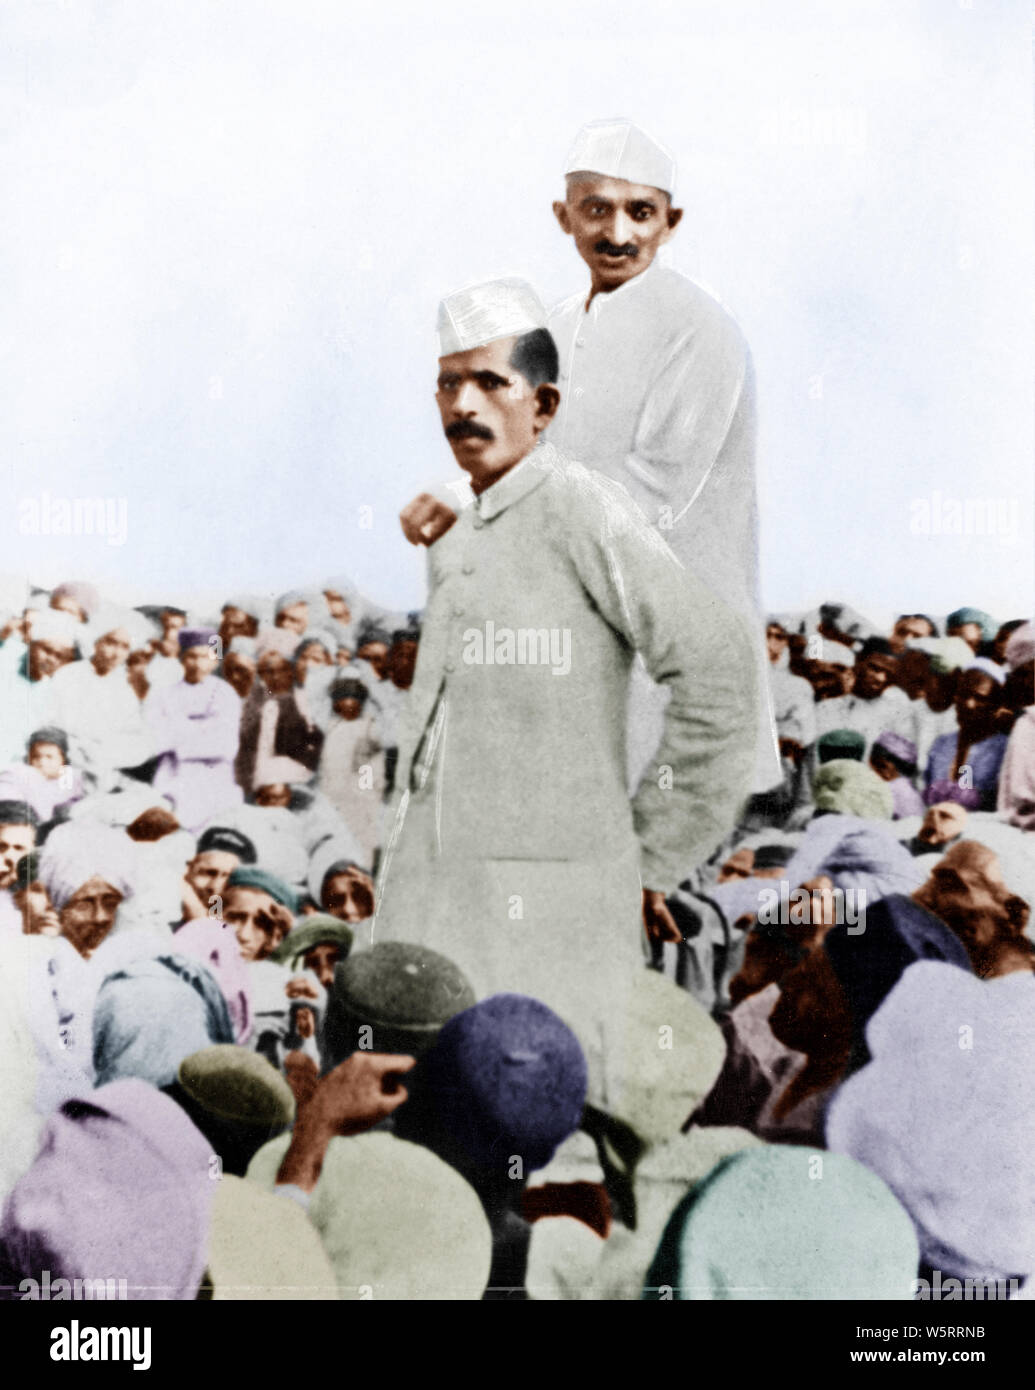 Mahatma Gandhi trifft sich gegen Rowlatt Act Shimla Himachal Pradesh Indien Asien Mai 1921 Alter Jahrgang 1900s Bild Stockfoto